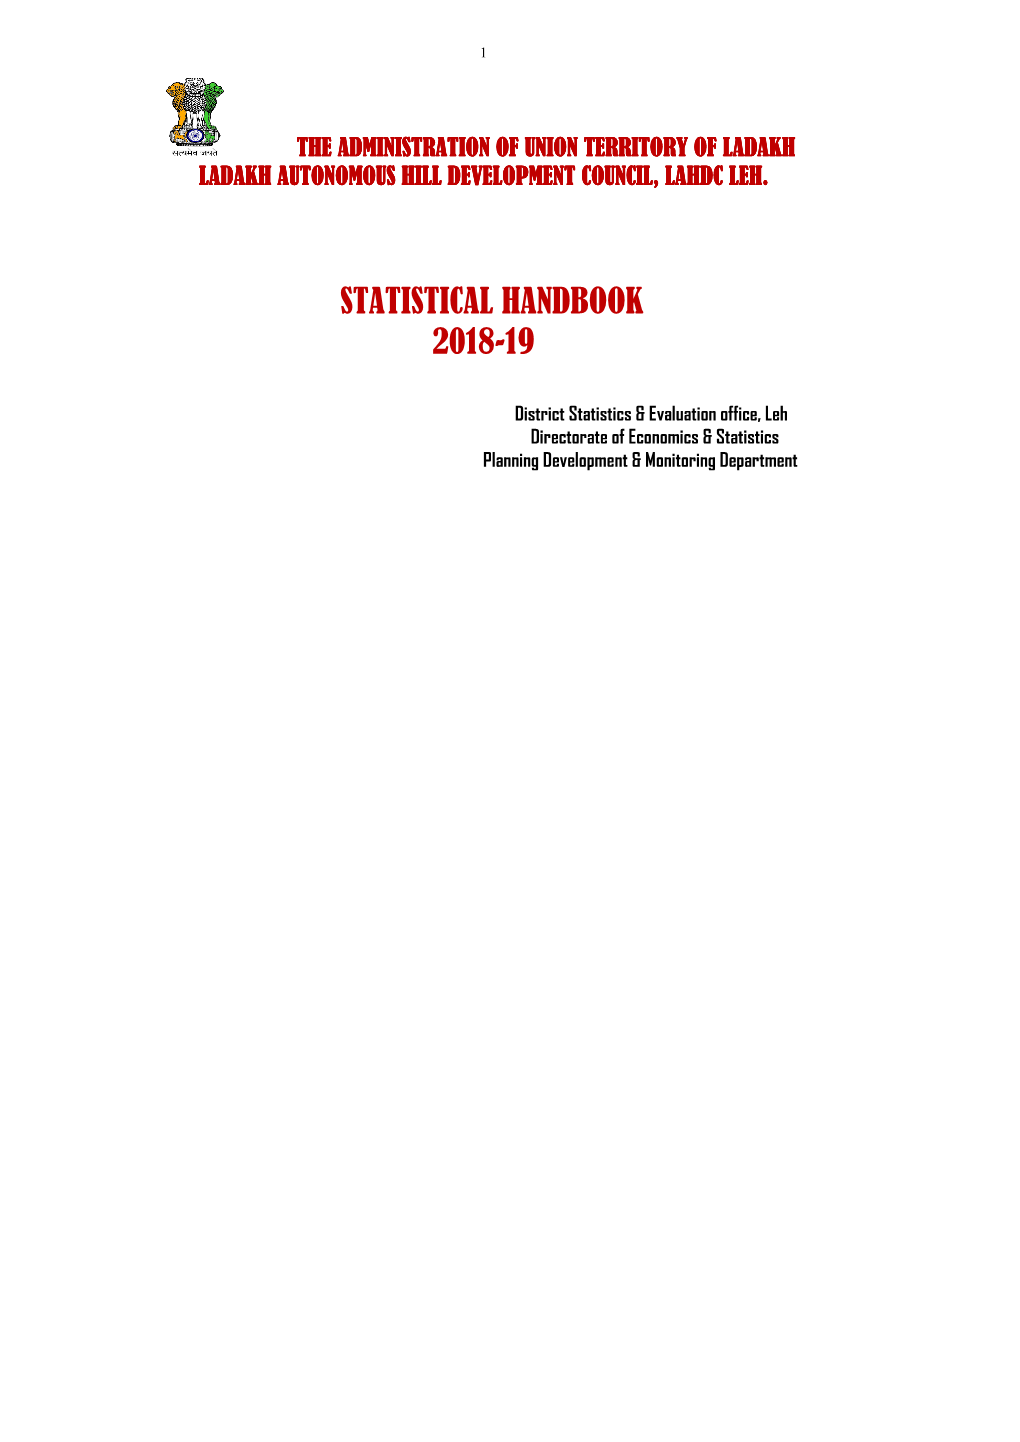 District Statistical Handbook 2018-19